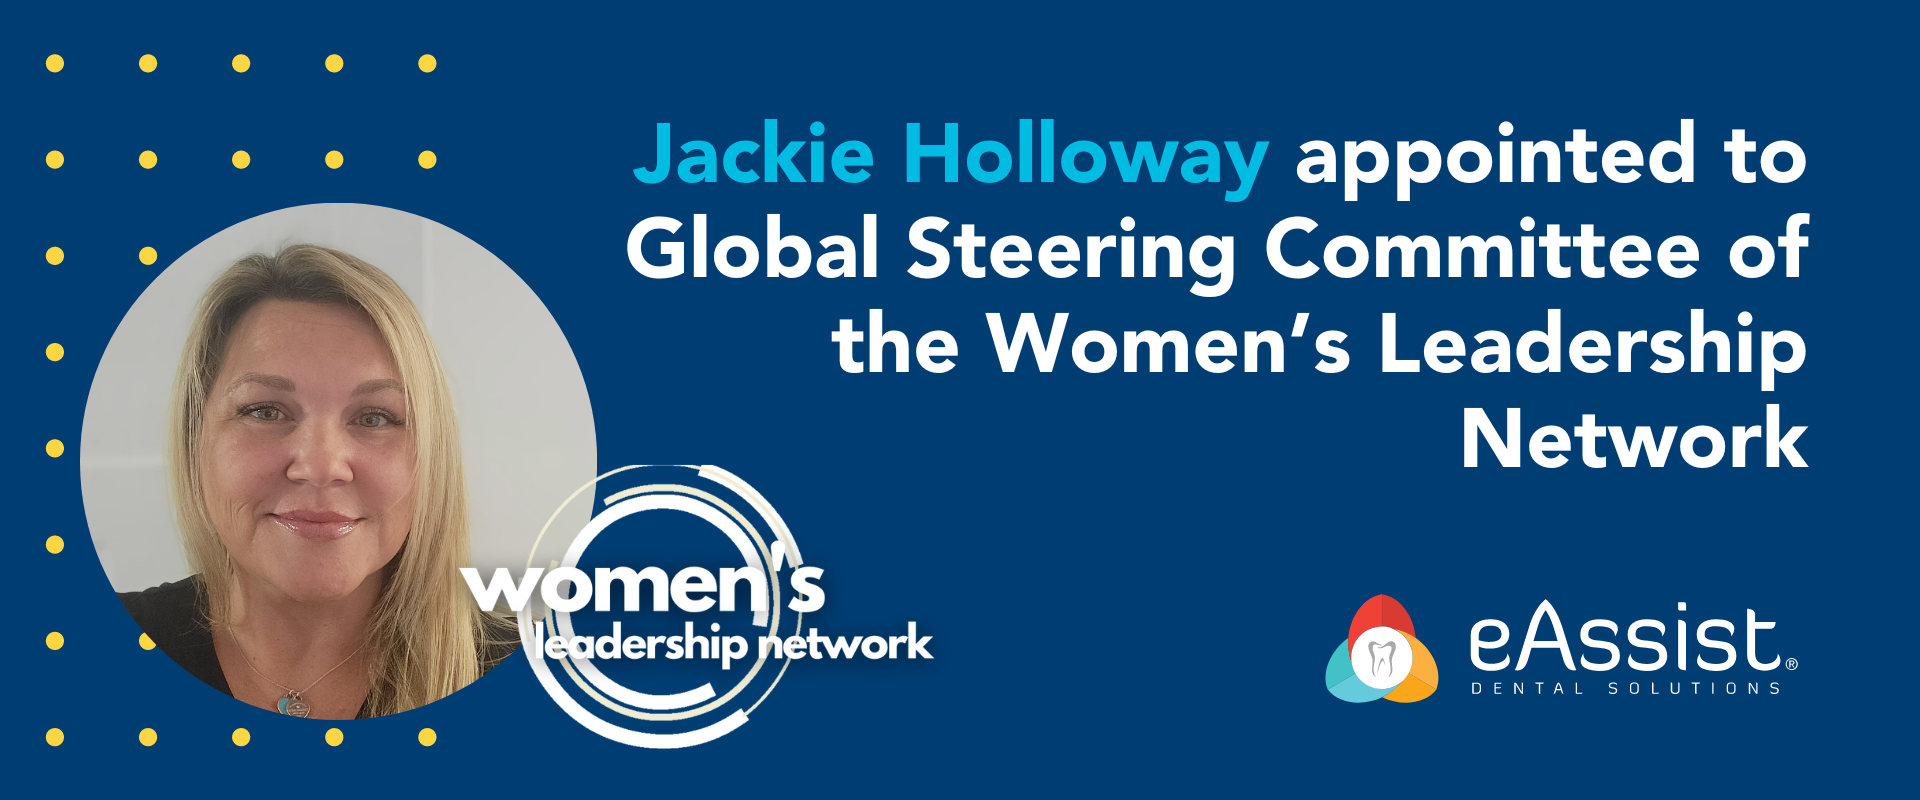 Jackie Holloway appointed to Global Steering Committee of the Women’s Leadership Network